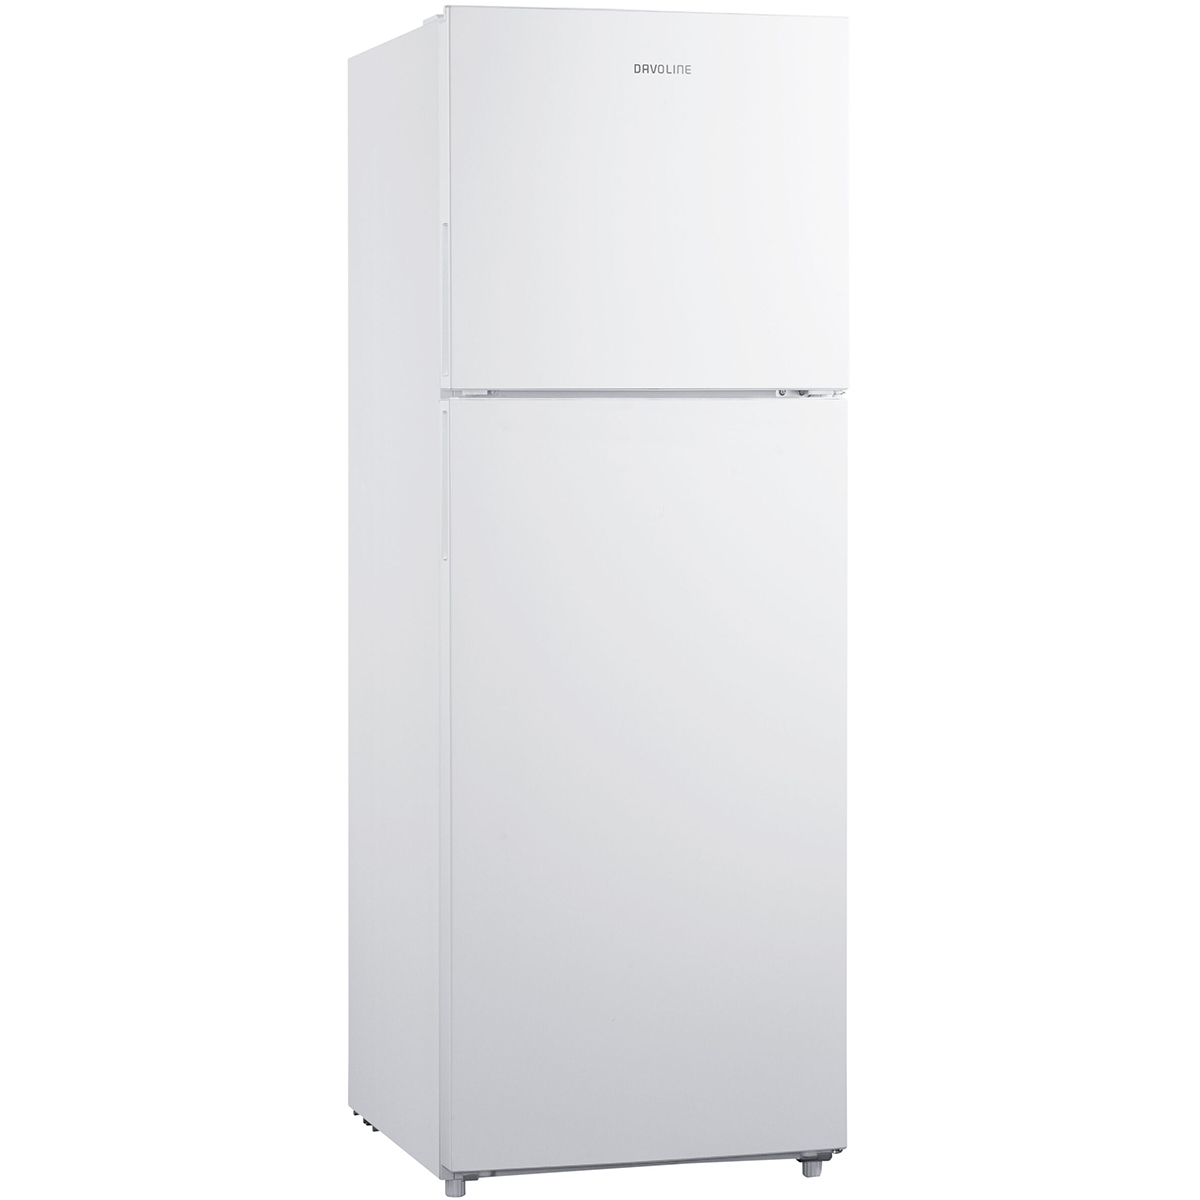 Davoline FTM 170 E W Ψυγείο Δίπορτο Total No Frost Λευκές Συσκευές 170 37